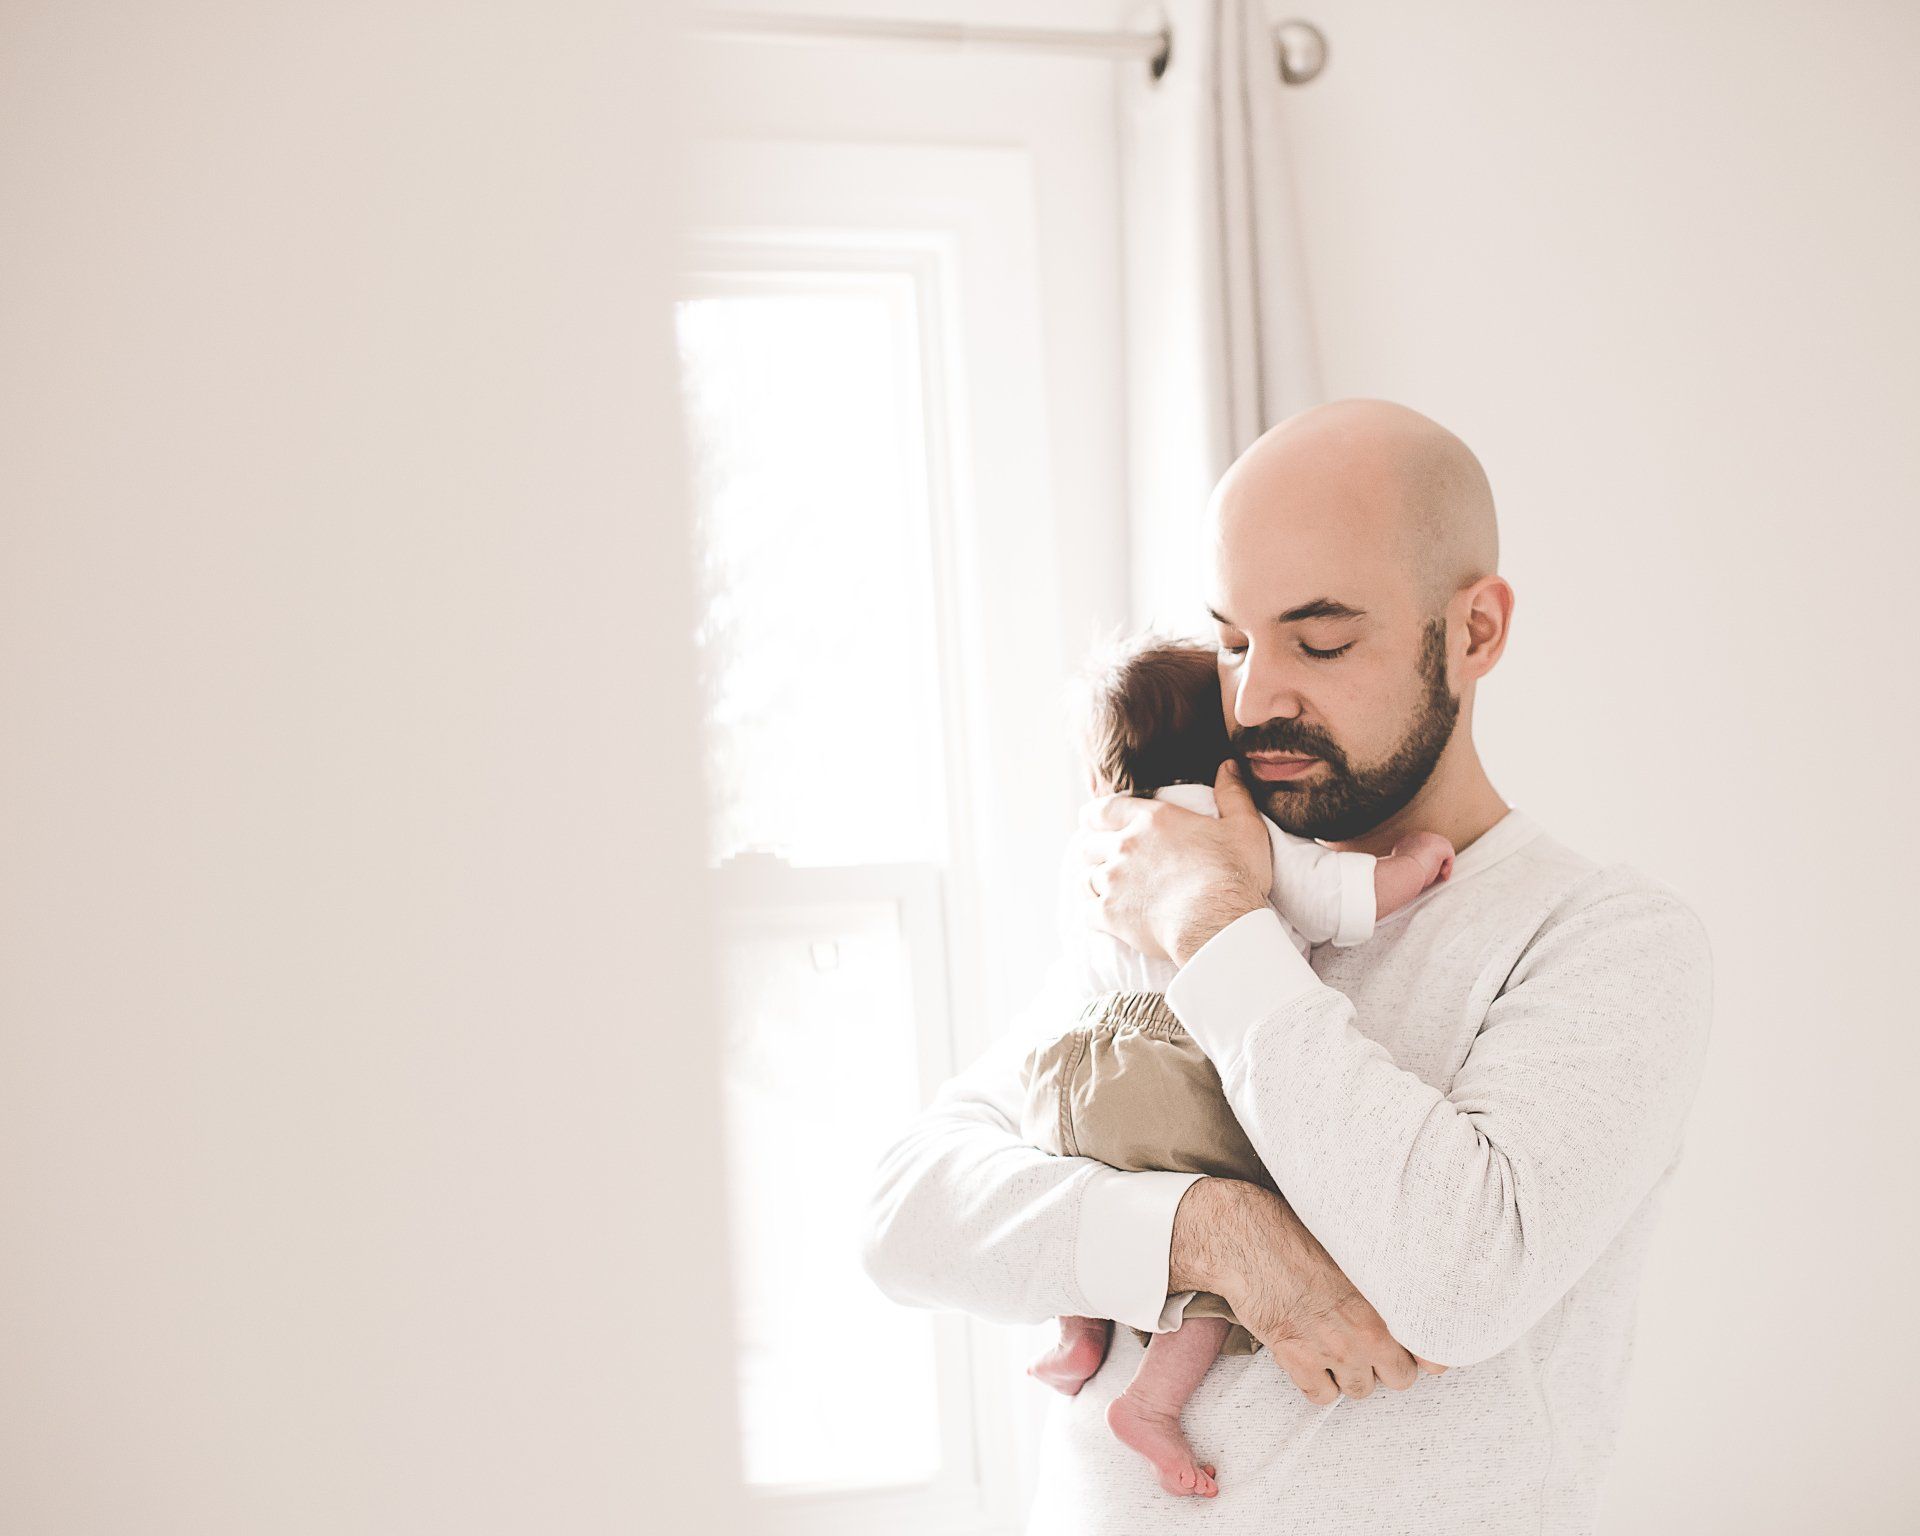 Lifestyle newborn photography Toronto | Stacey Naglie | Man holding newborn